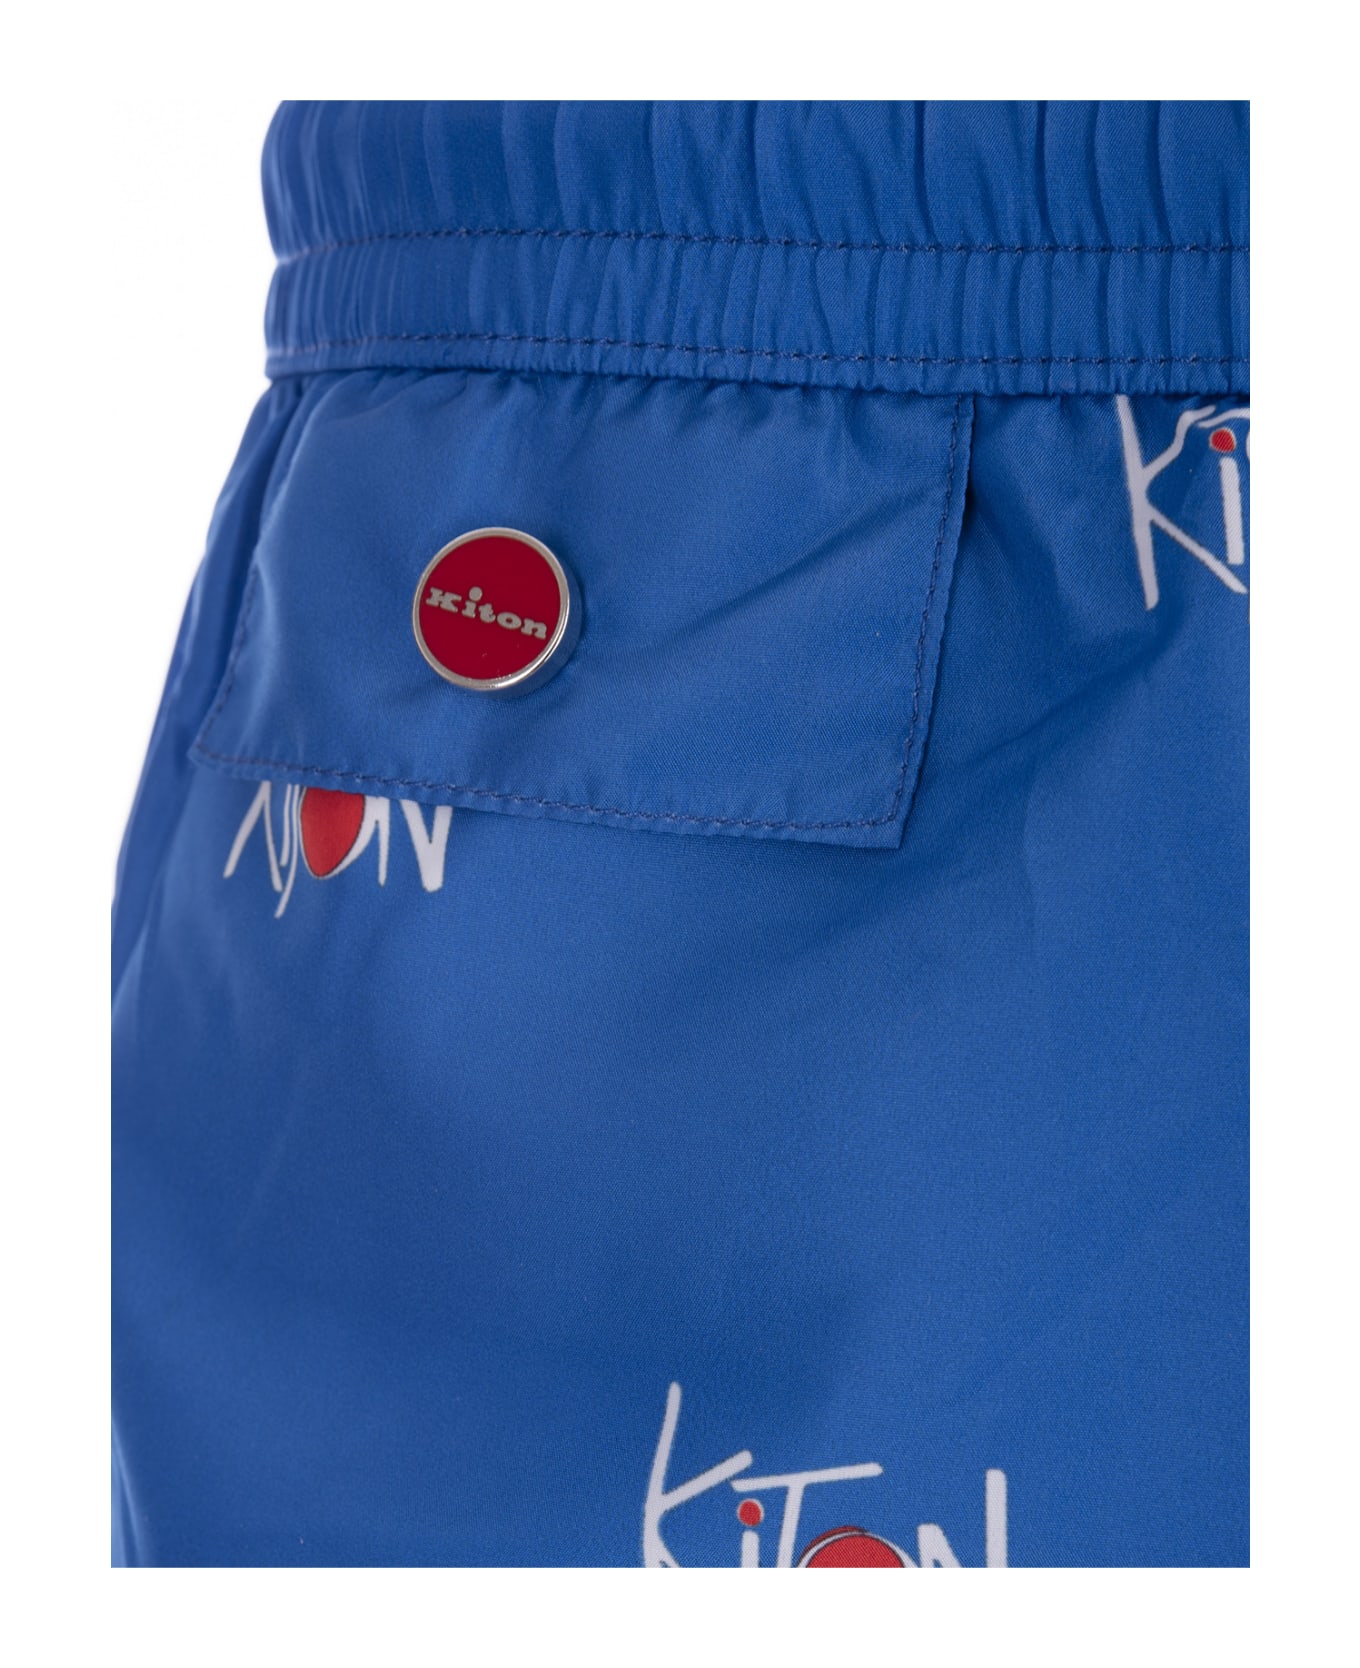 Kiton Blue Swim Shorts With All-over Logo - Blue